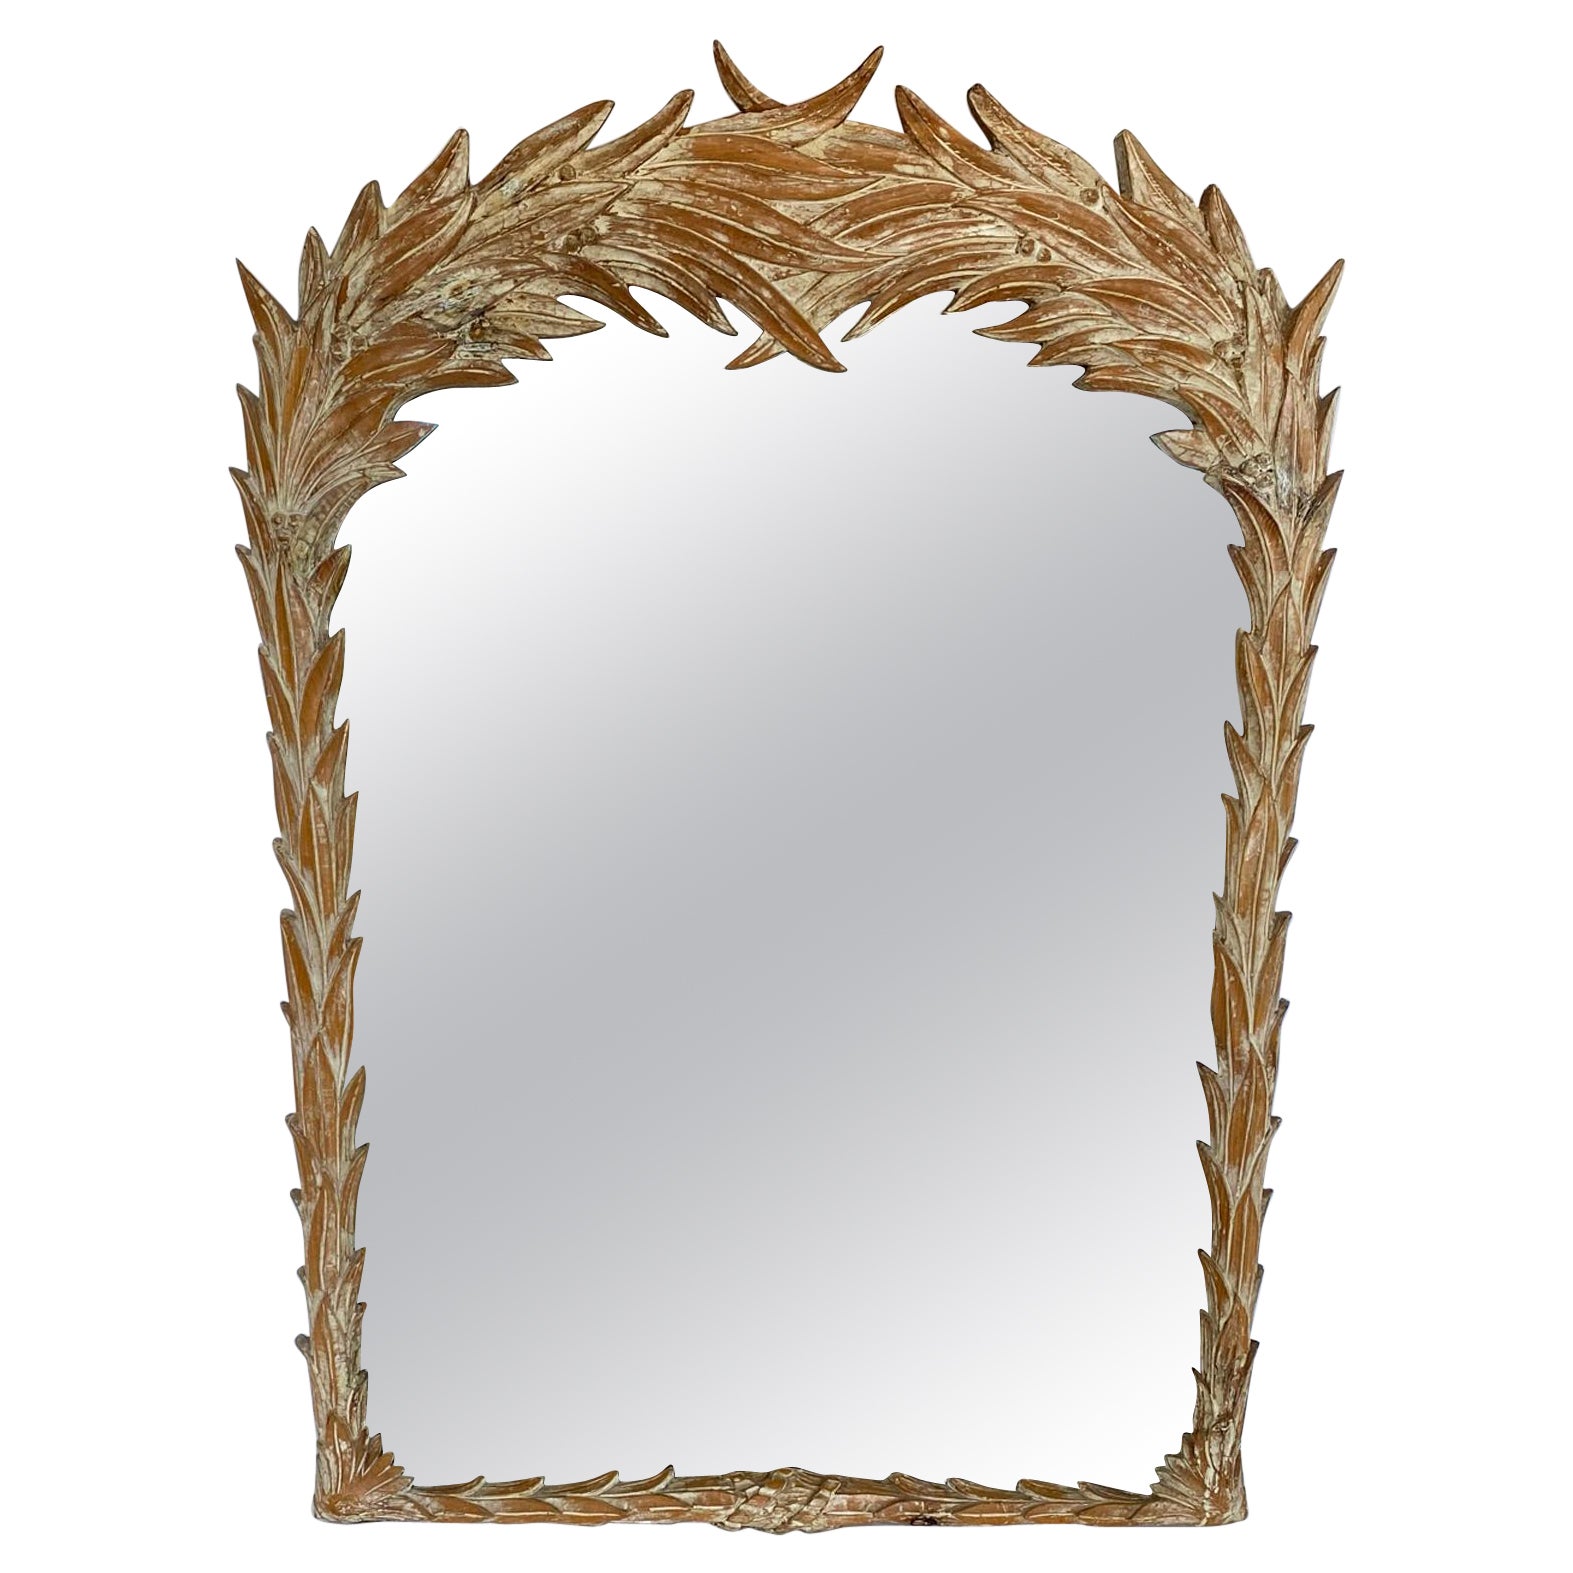 Carved Pine Foliate Mirror